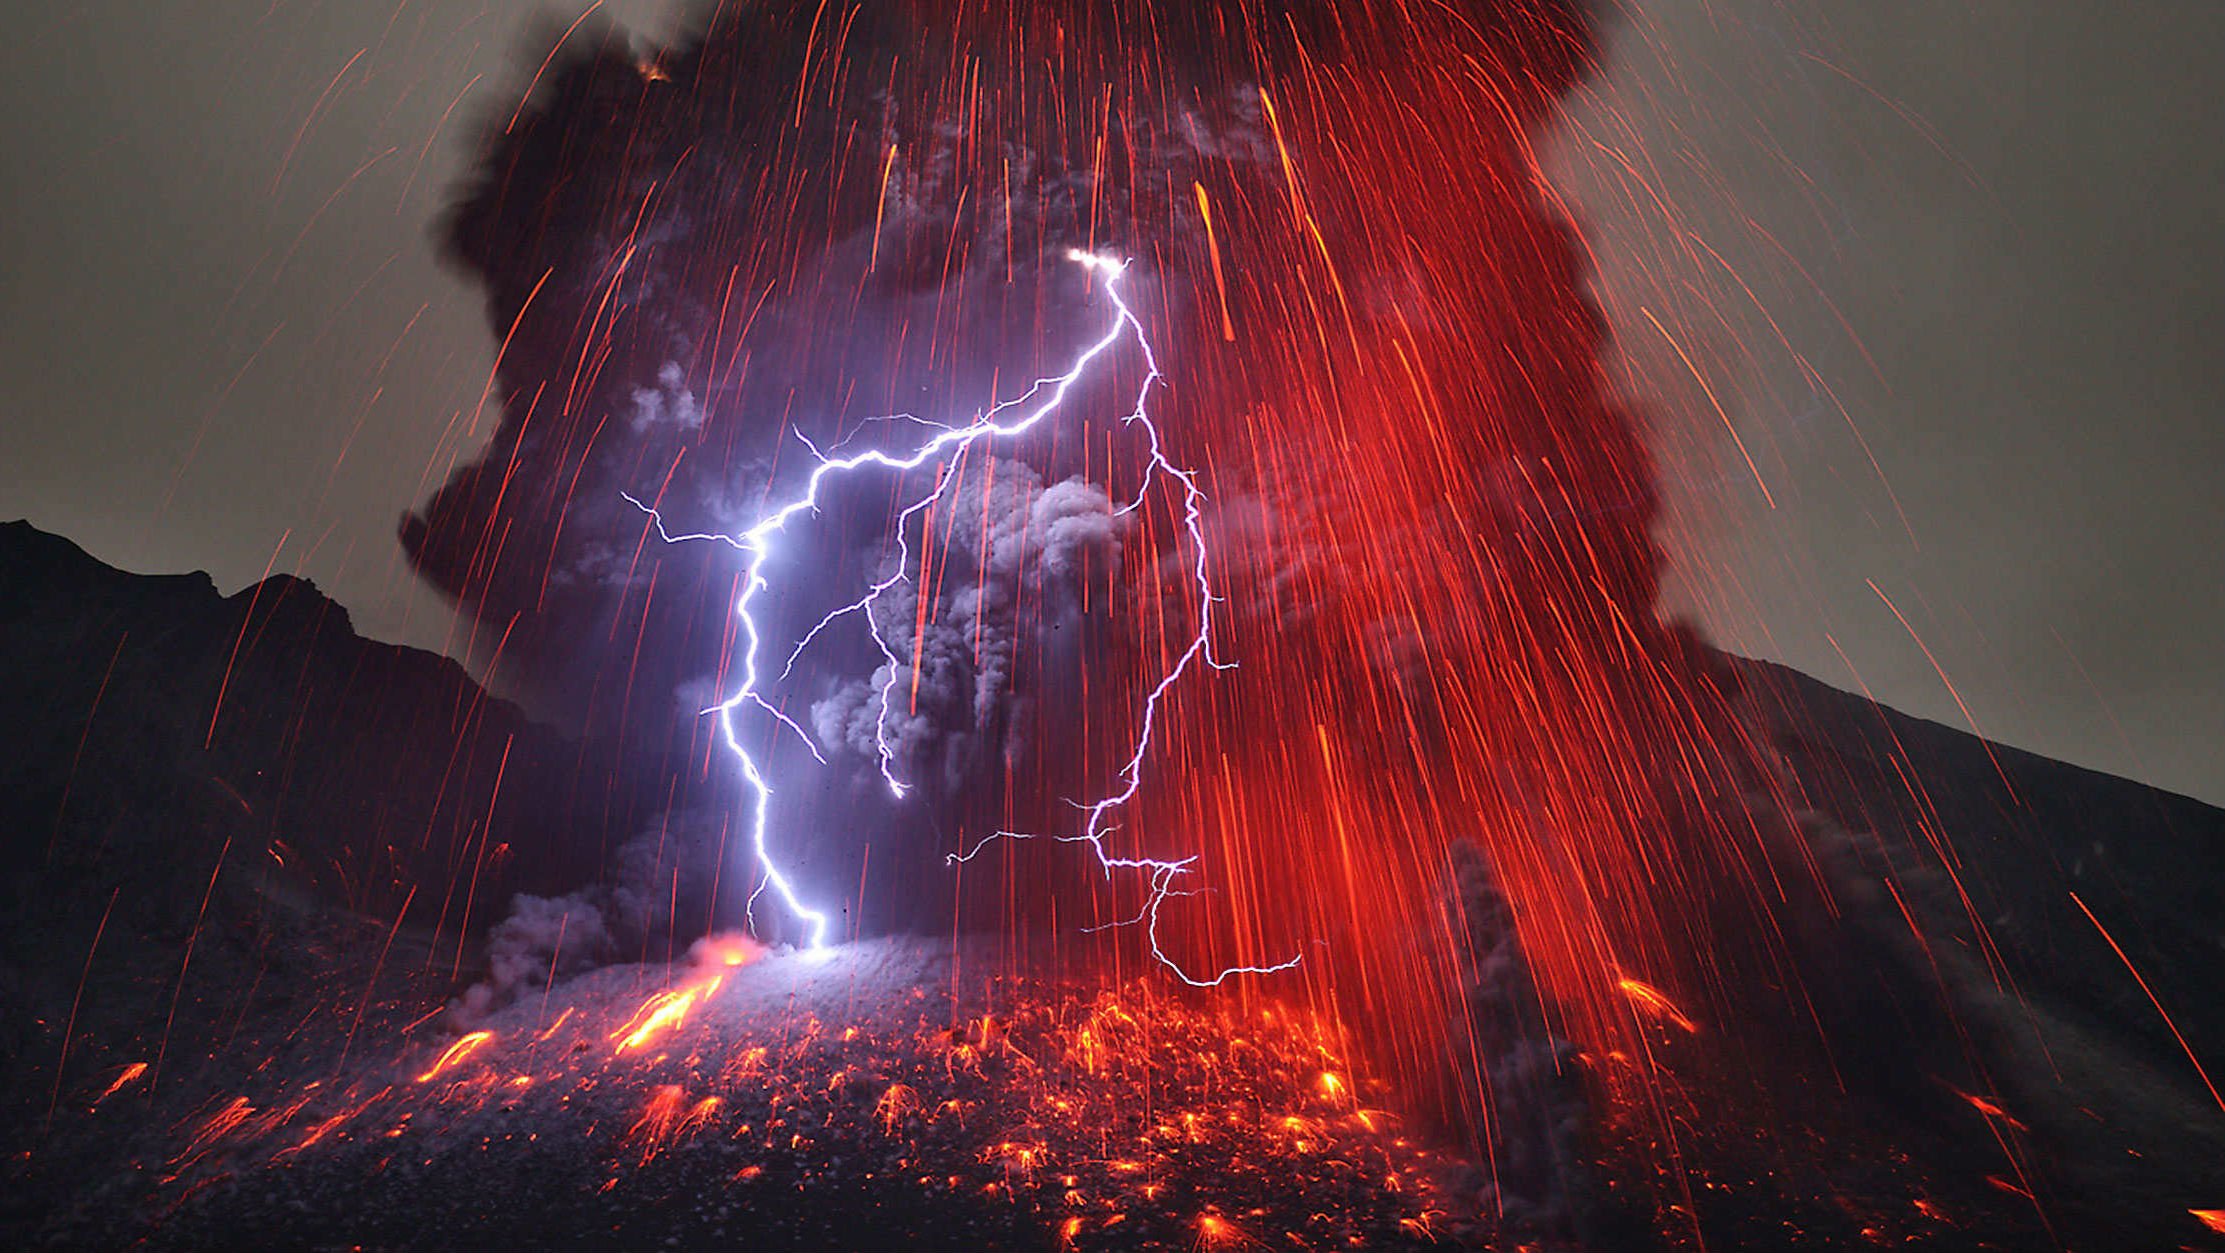 Lava Nature Landscape Mountains Fire Lightning Wallpaper Background